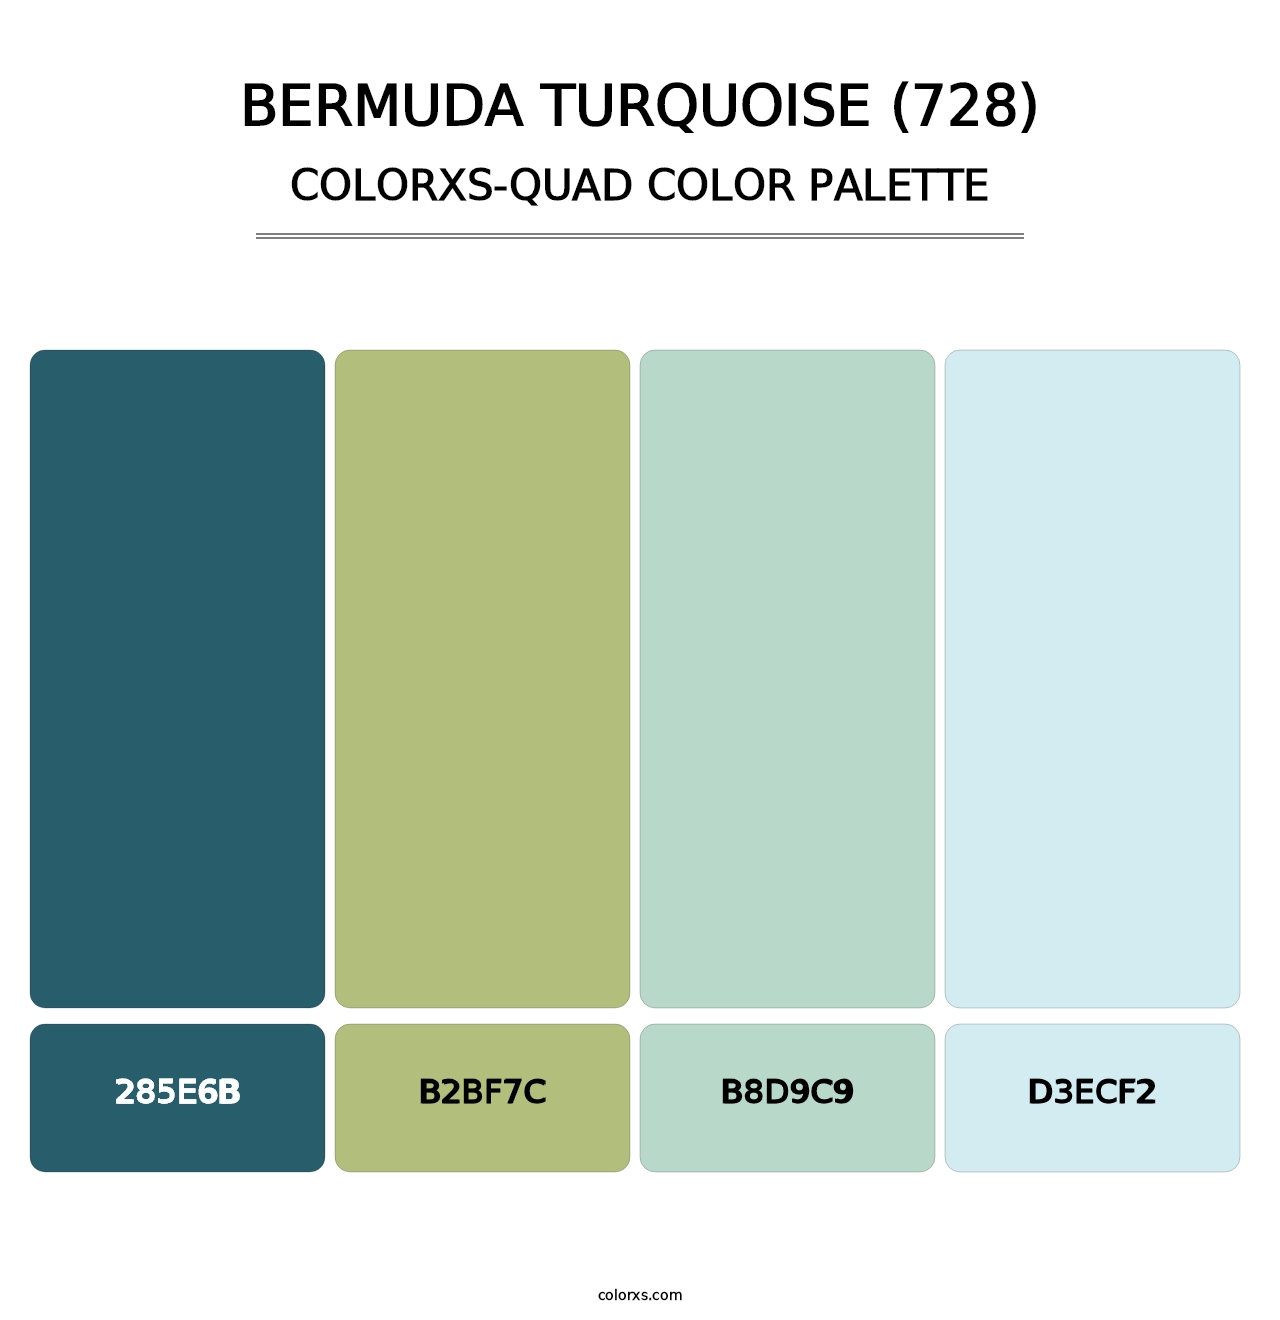 Bermuda Turquoise (728) - Colorxs Quad Palette